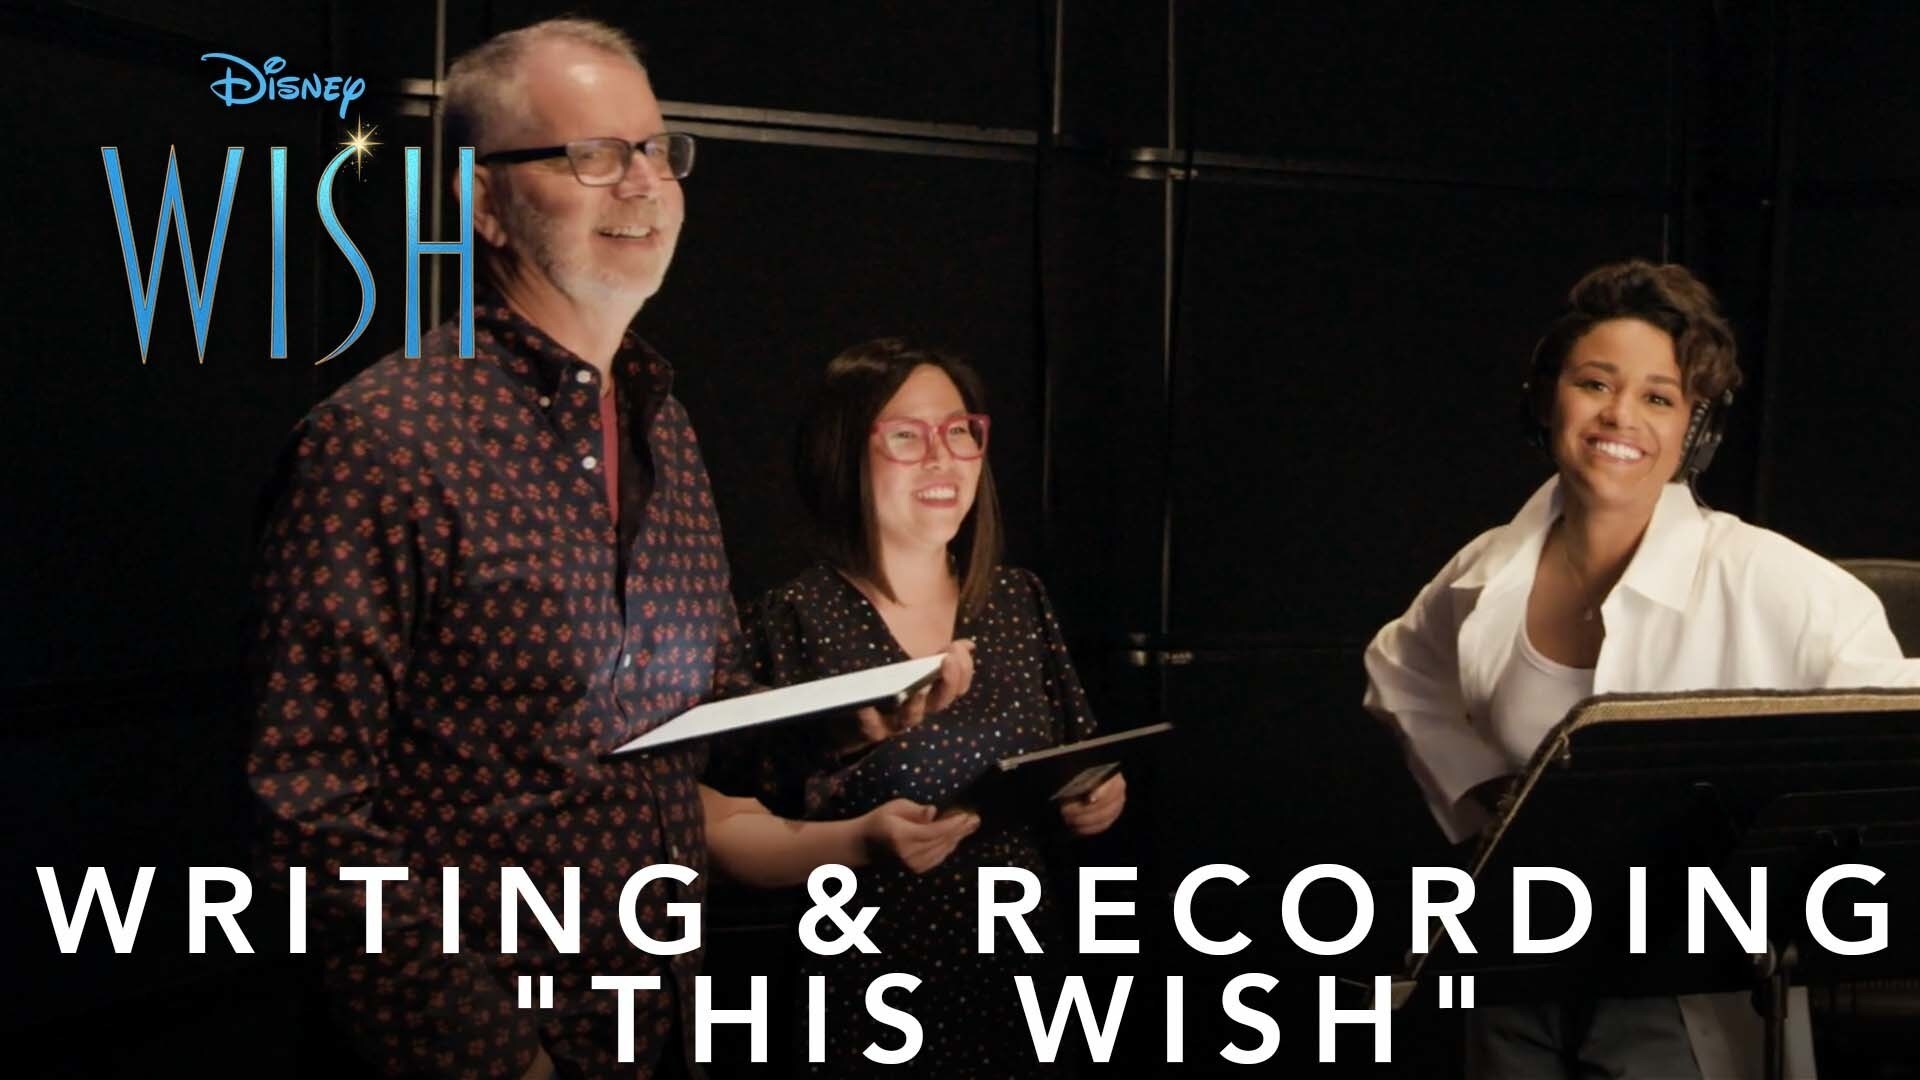 Disney's Wish | Writing & Recording "This Wish"